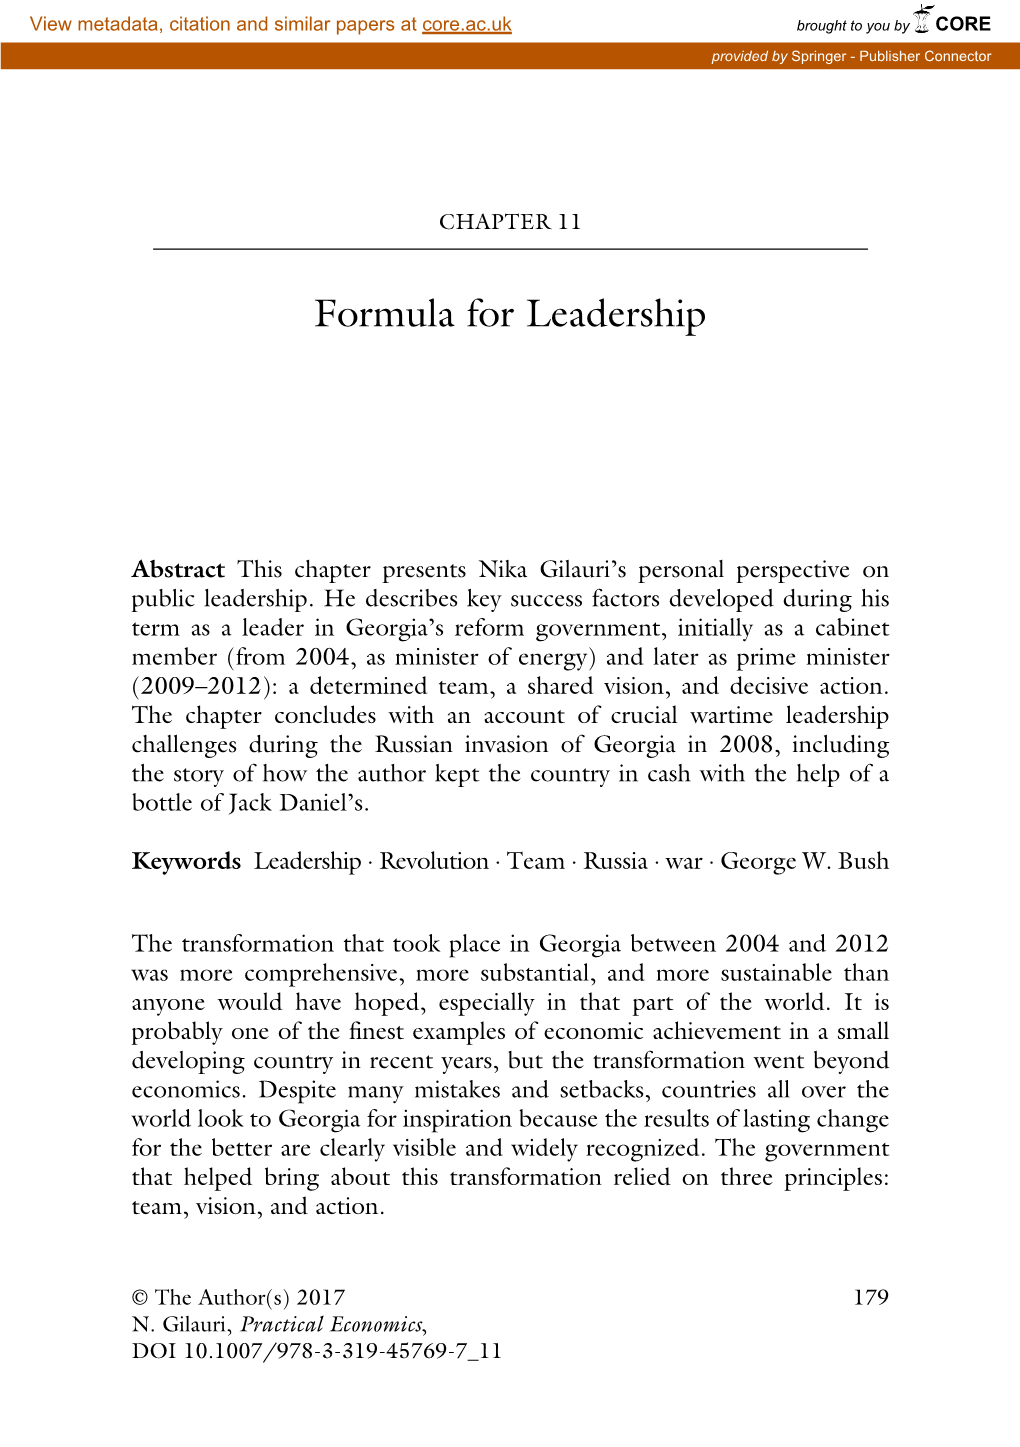 Formula for Leadership